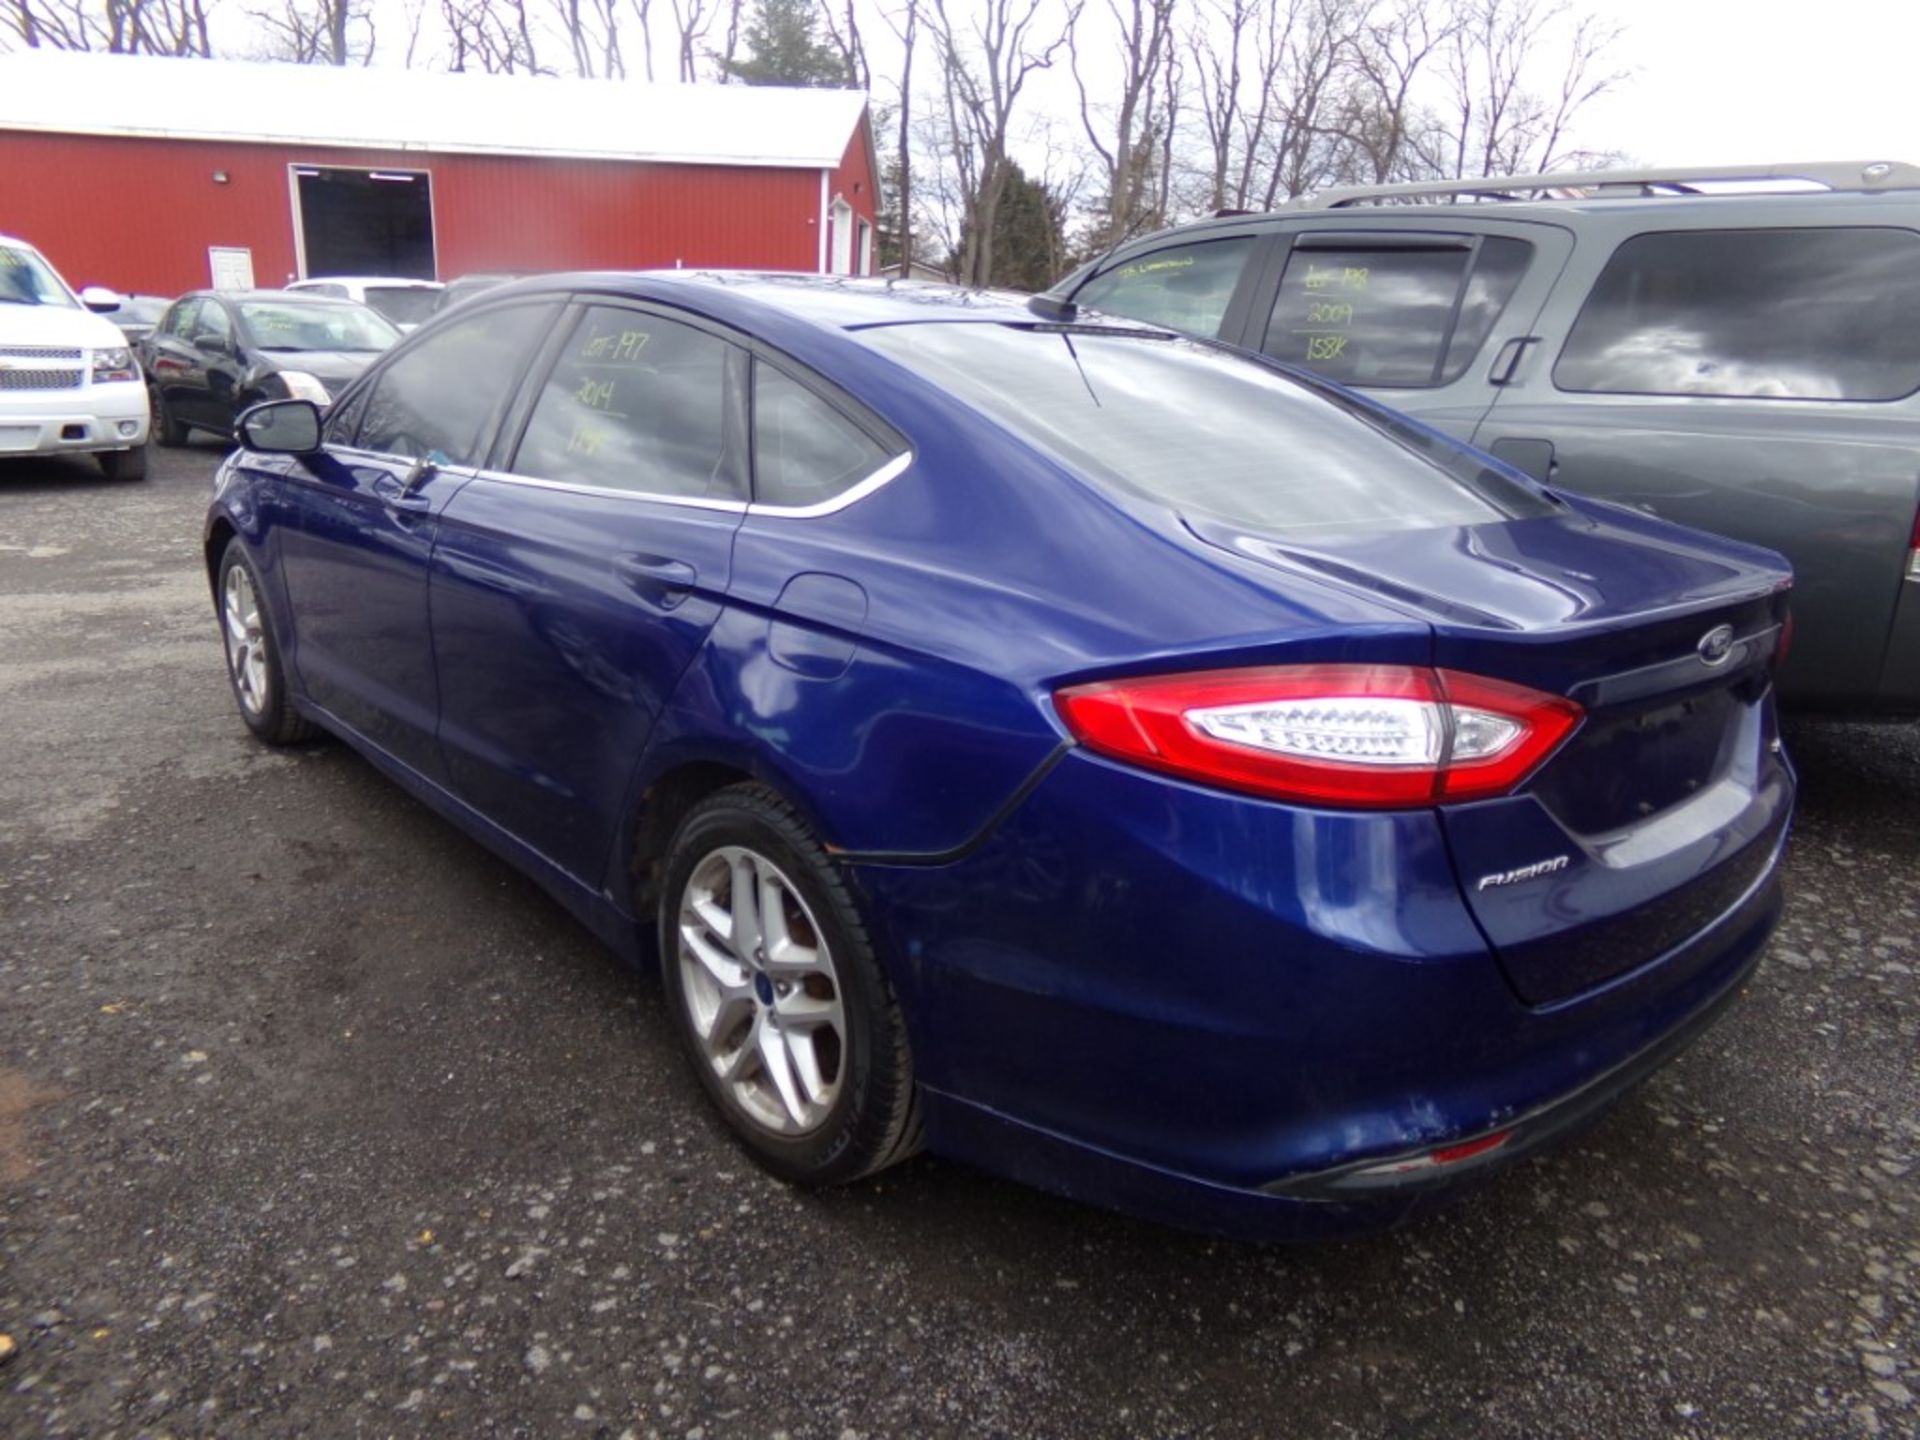 2014 Ford Fusion SE, Blue, 174,739 Miles, VIN#1FA6P0H7XE5365423, AIR BAG LIGHT IS ON, MINOR DAMAGE - Bild 4 aus 18